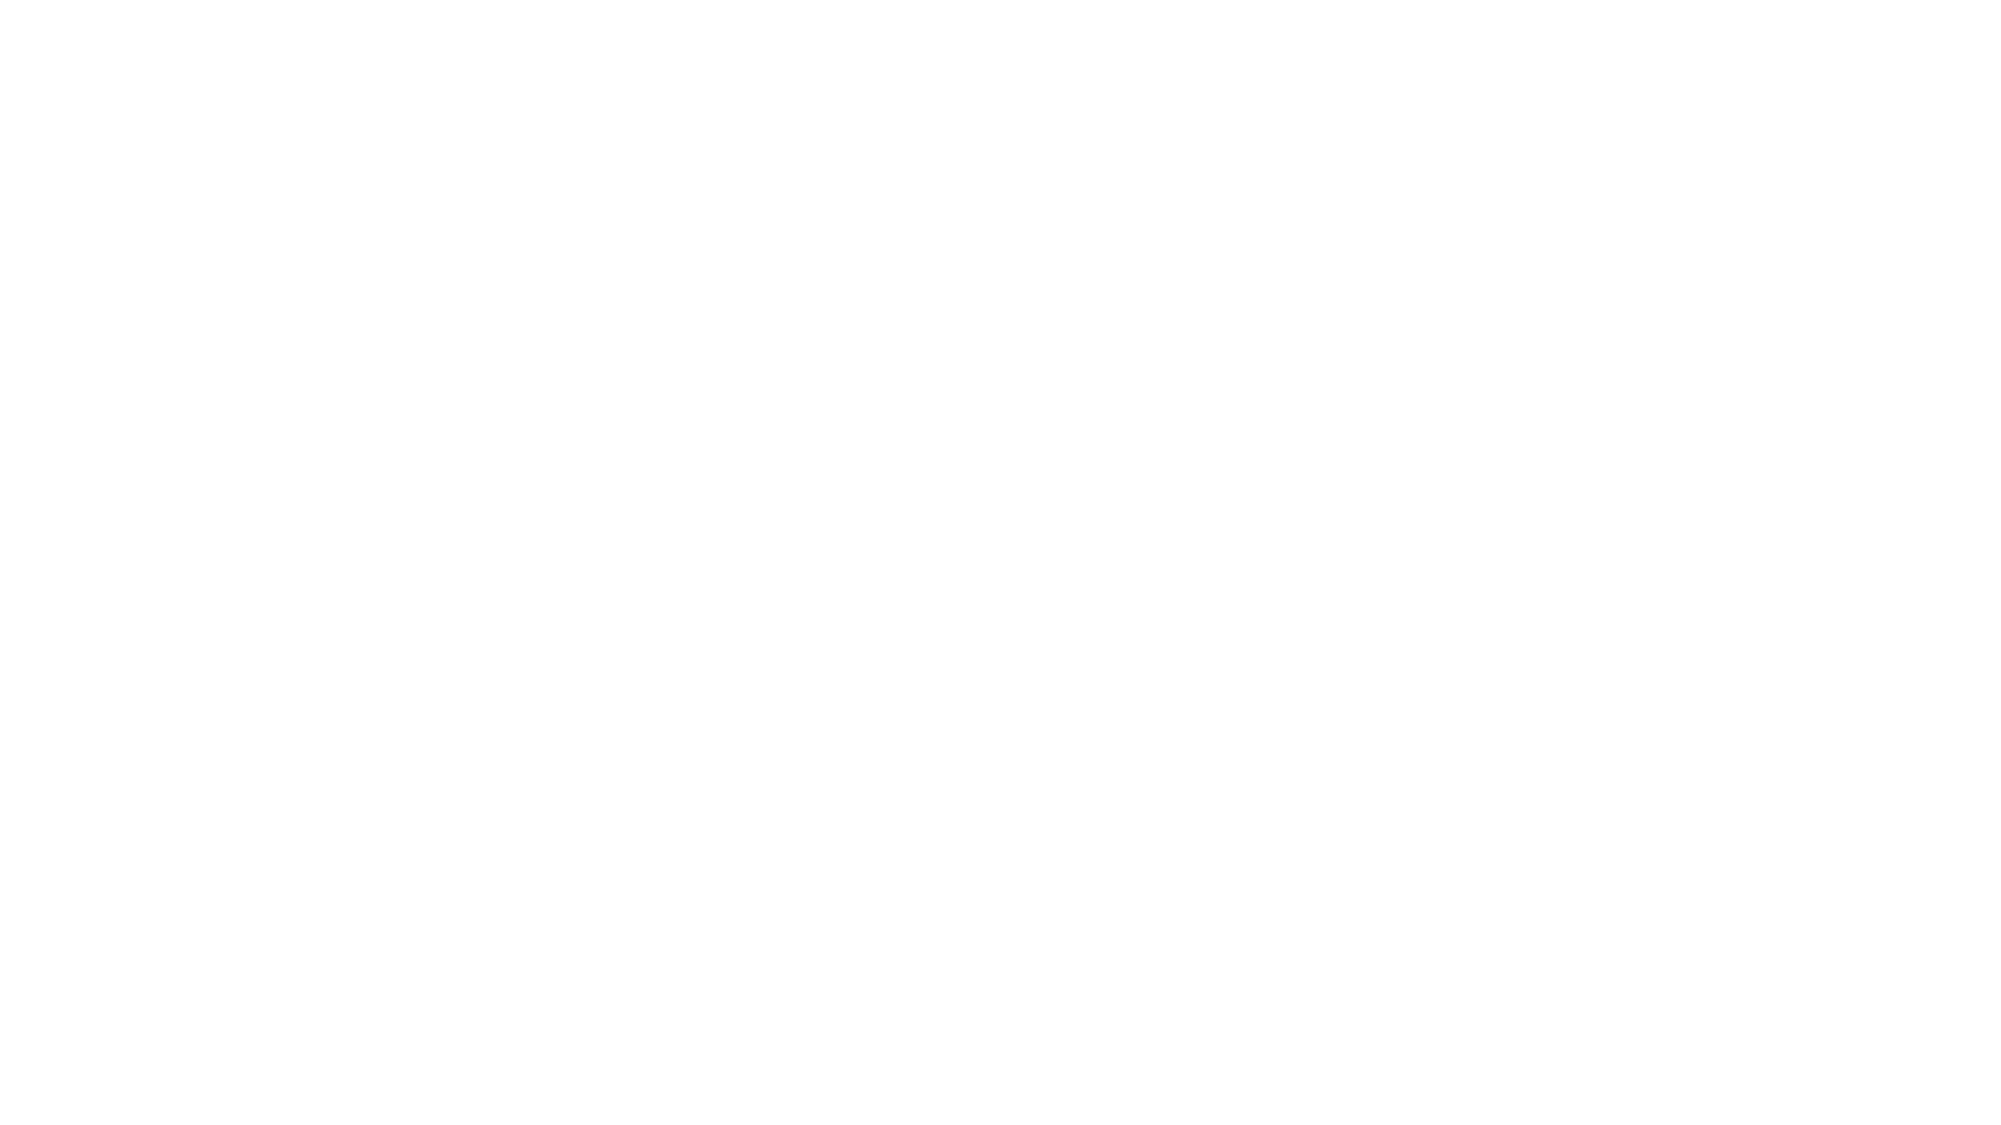 Noir Styles